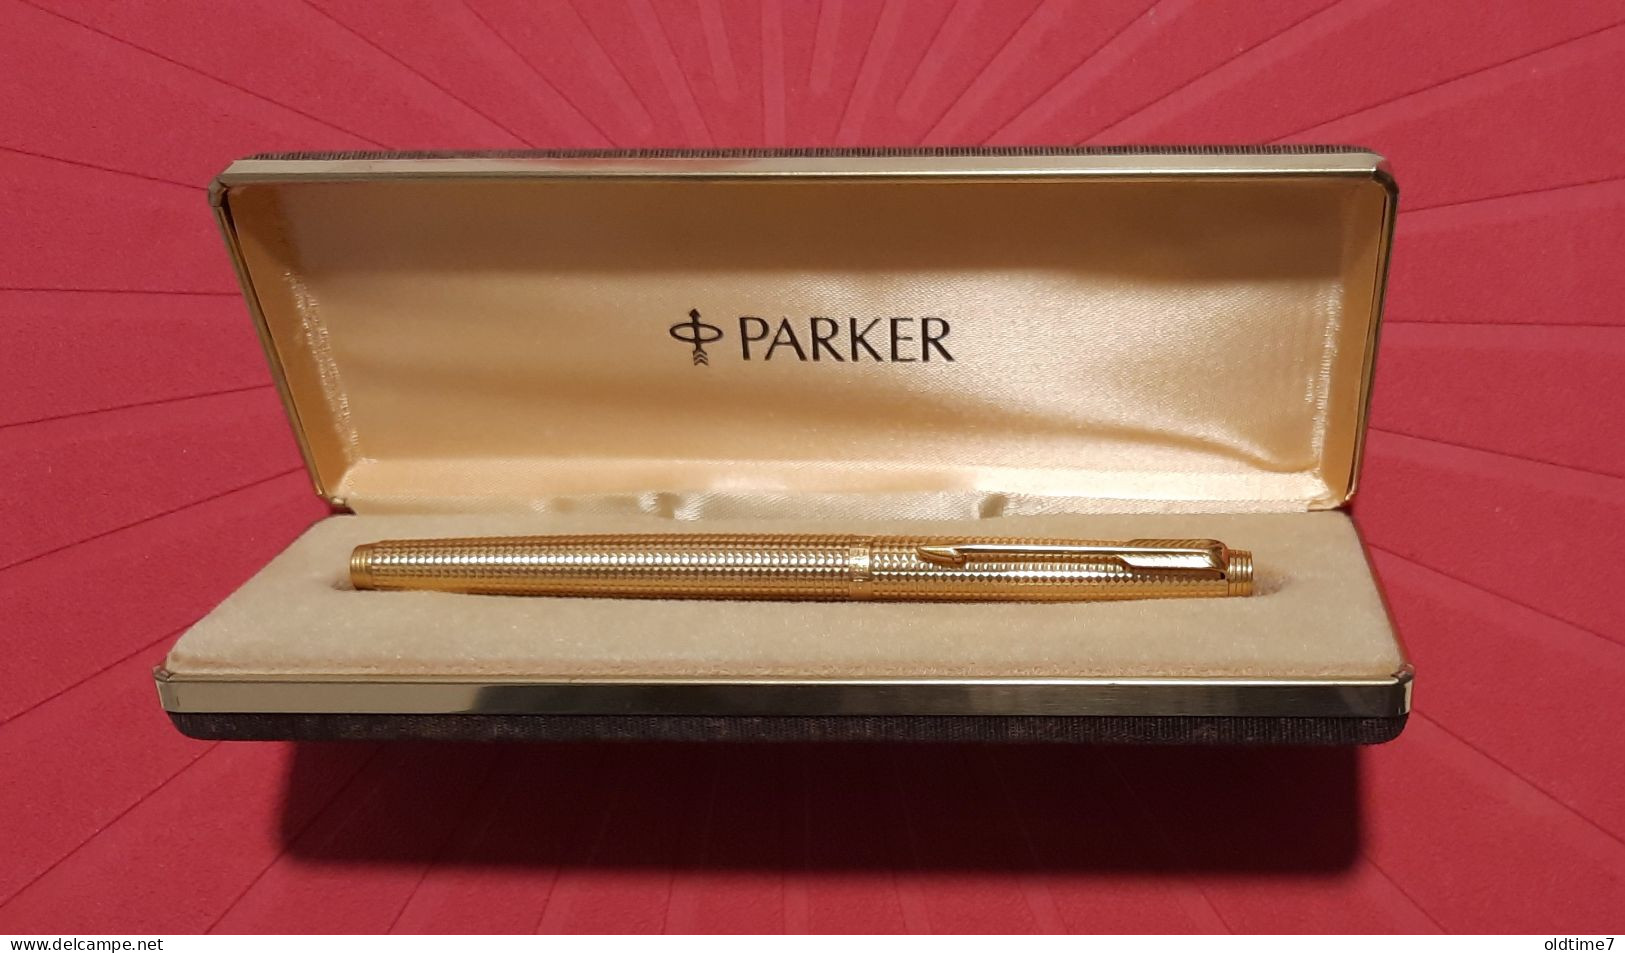 Parker Gold - Pens